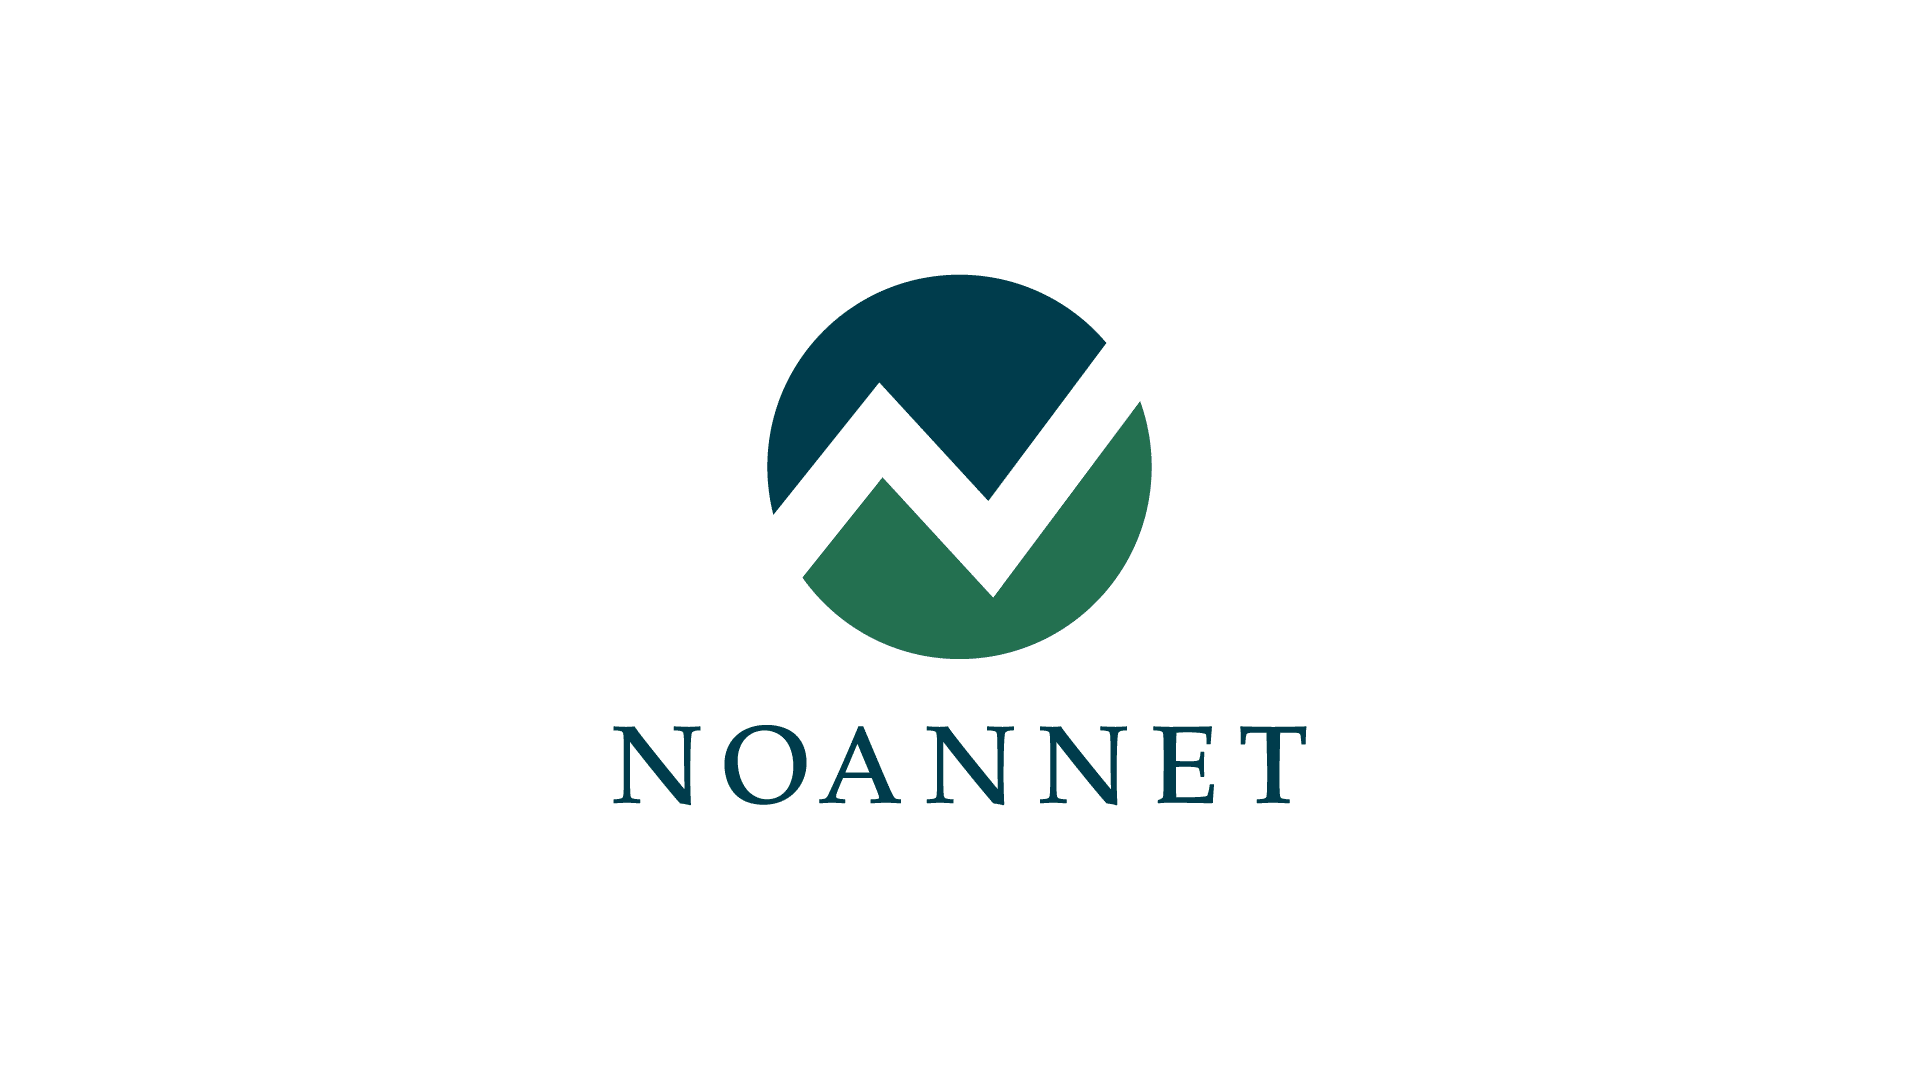 Noannet logo on white